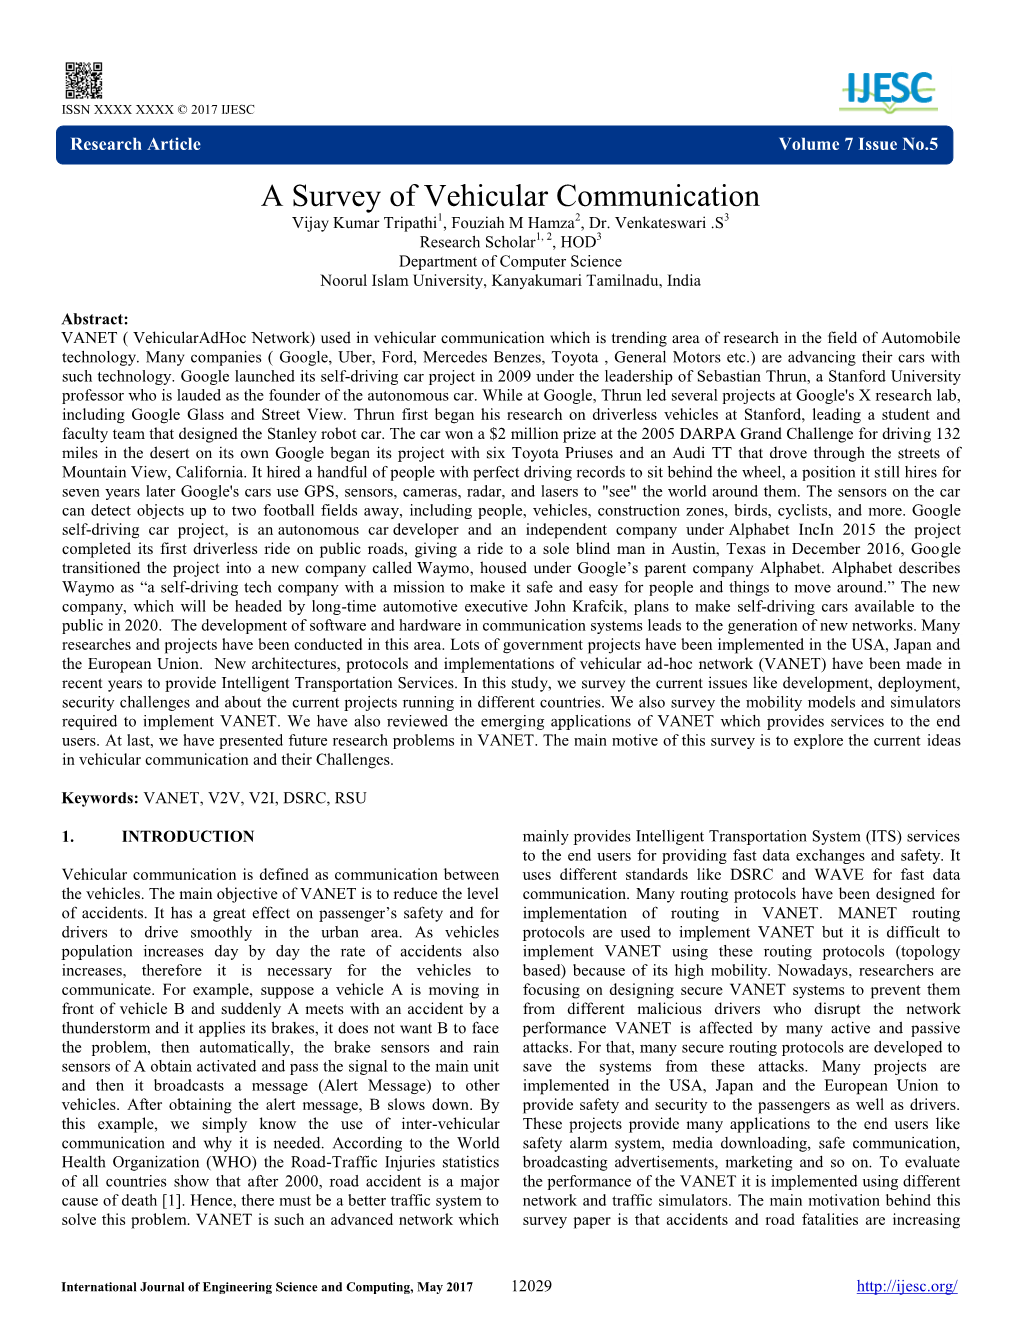 A Survey of Vehicular Communication Vijay Kumar Tripathi1, Fouziah M Hamza2, Dr